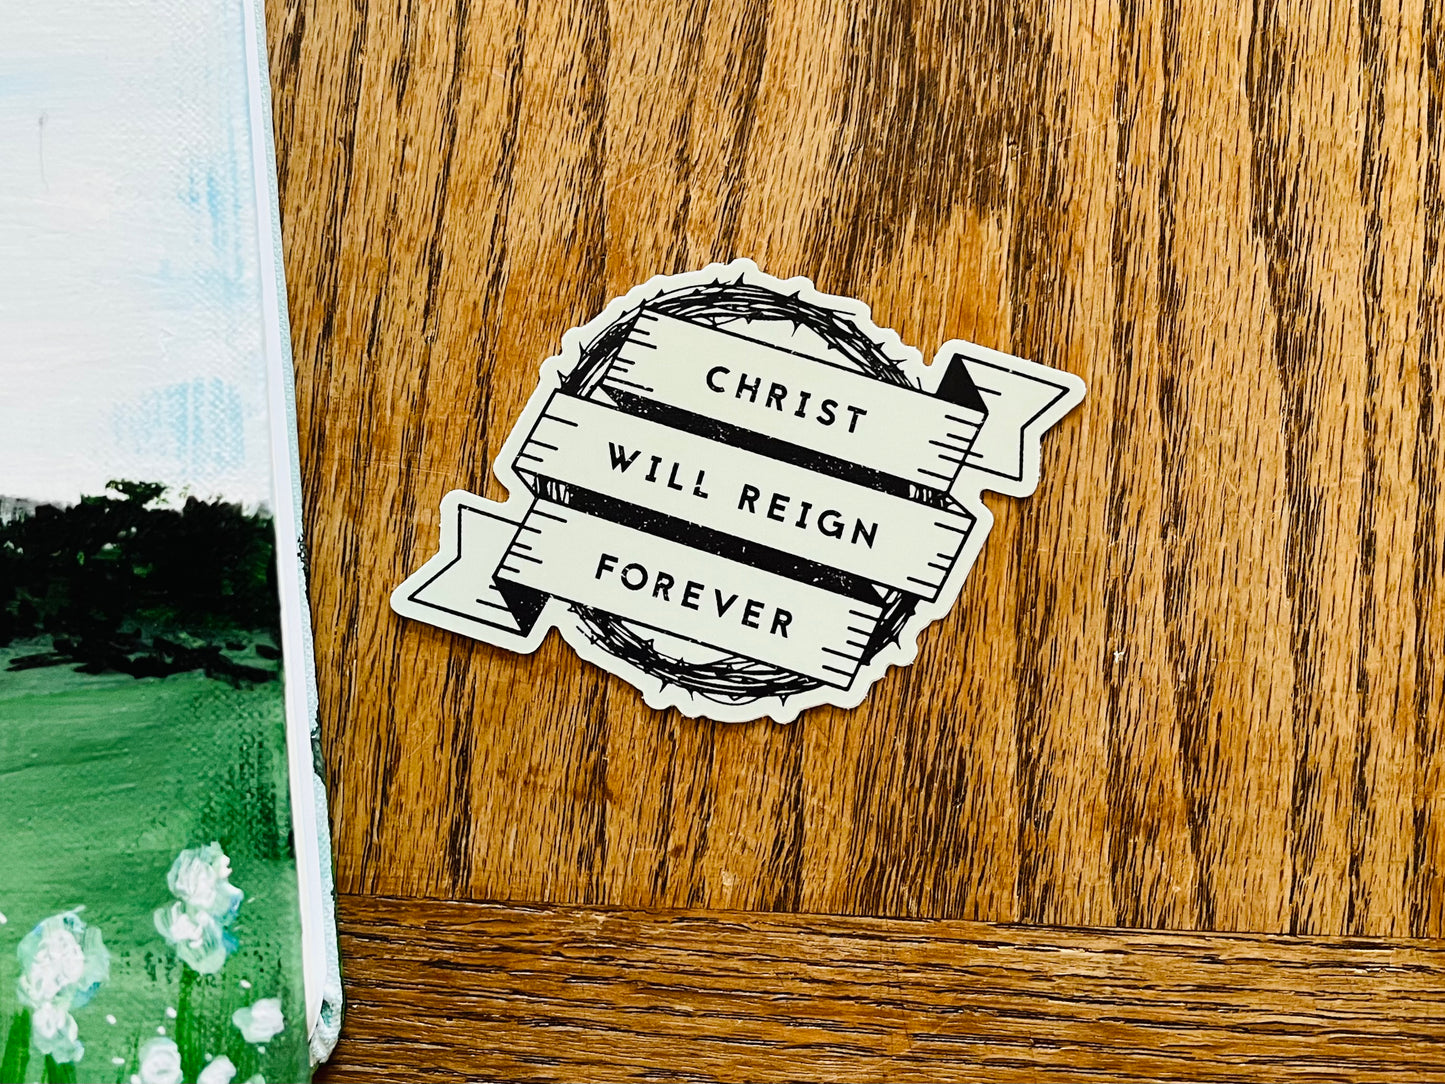 Christ will Reign Forever sticker